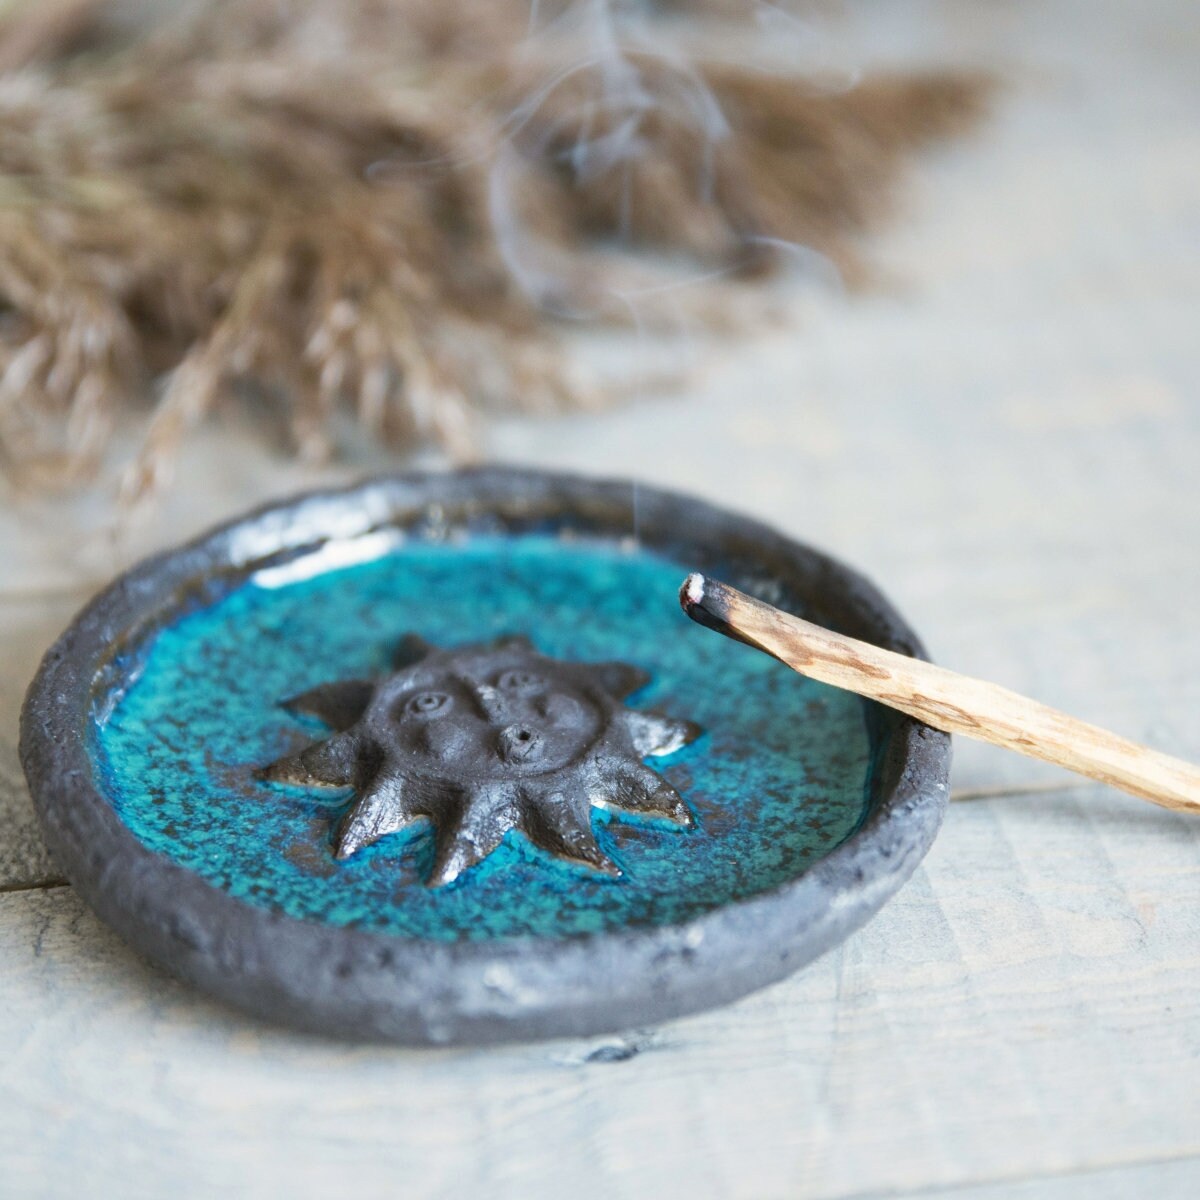 Palo Santo incense ceramic plate with the sun - Dark blue cone incense burner plate - Incense stick holder